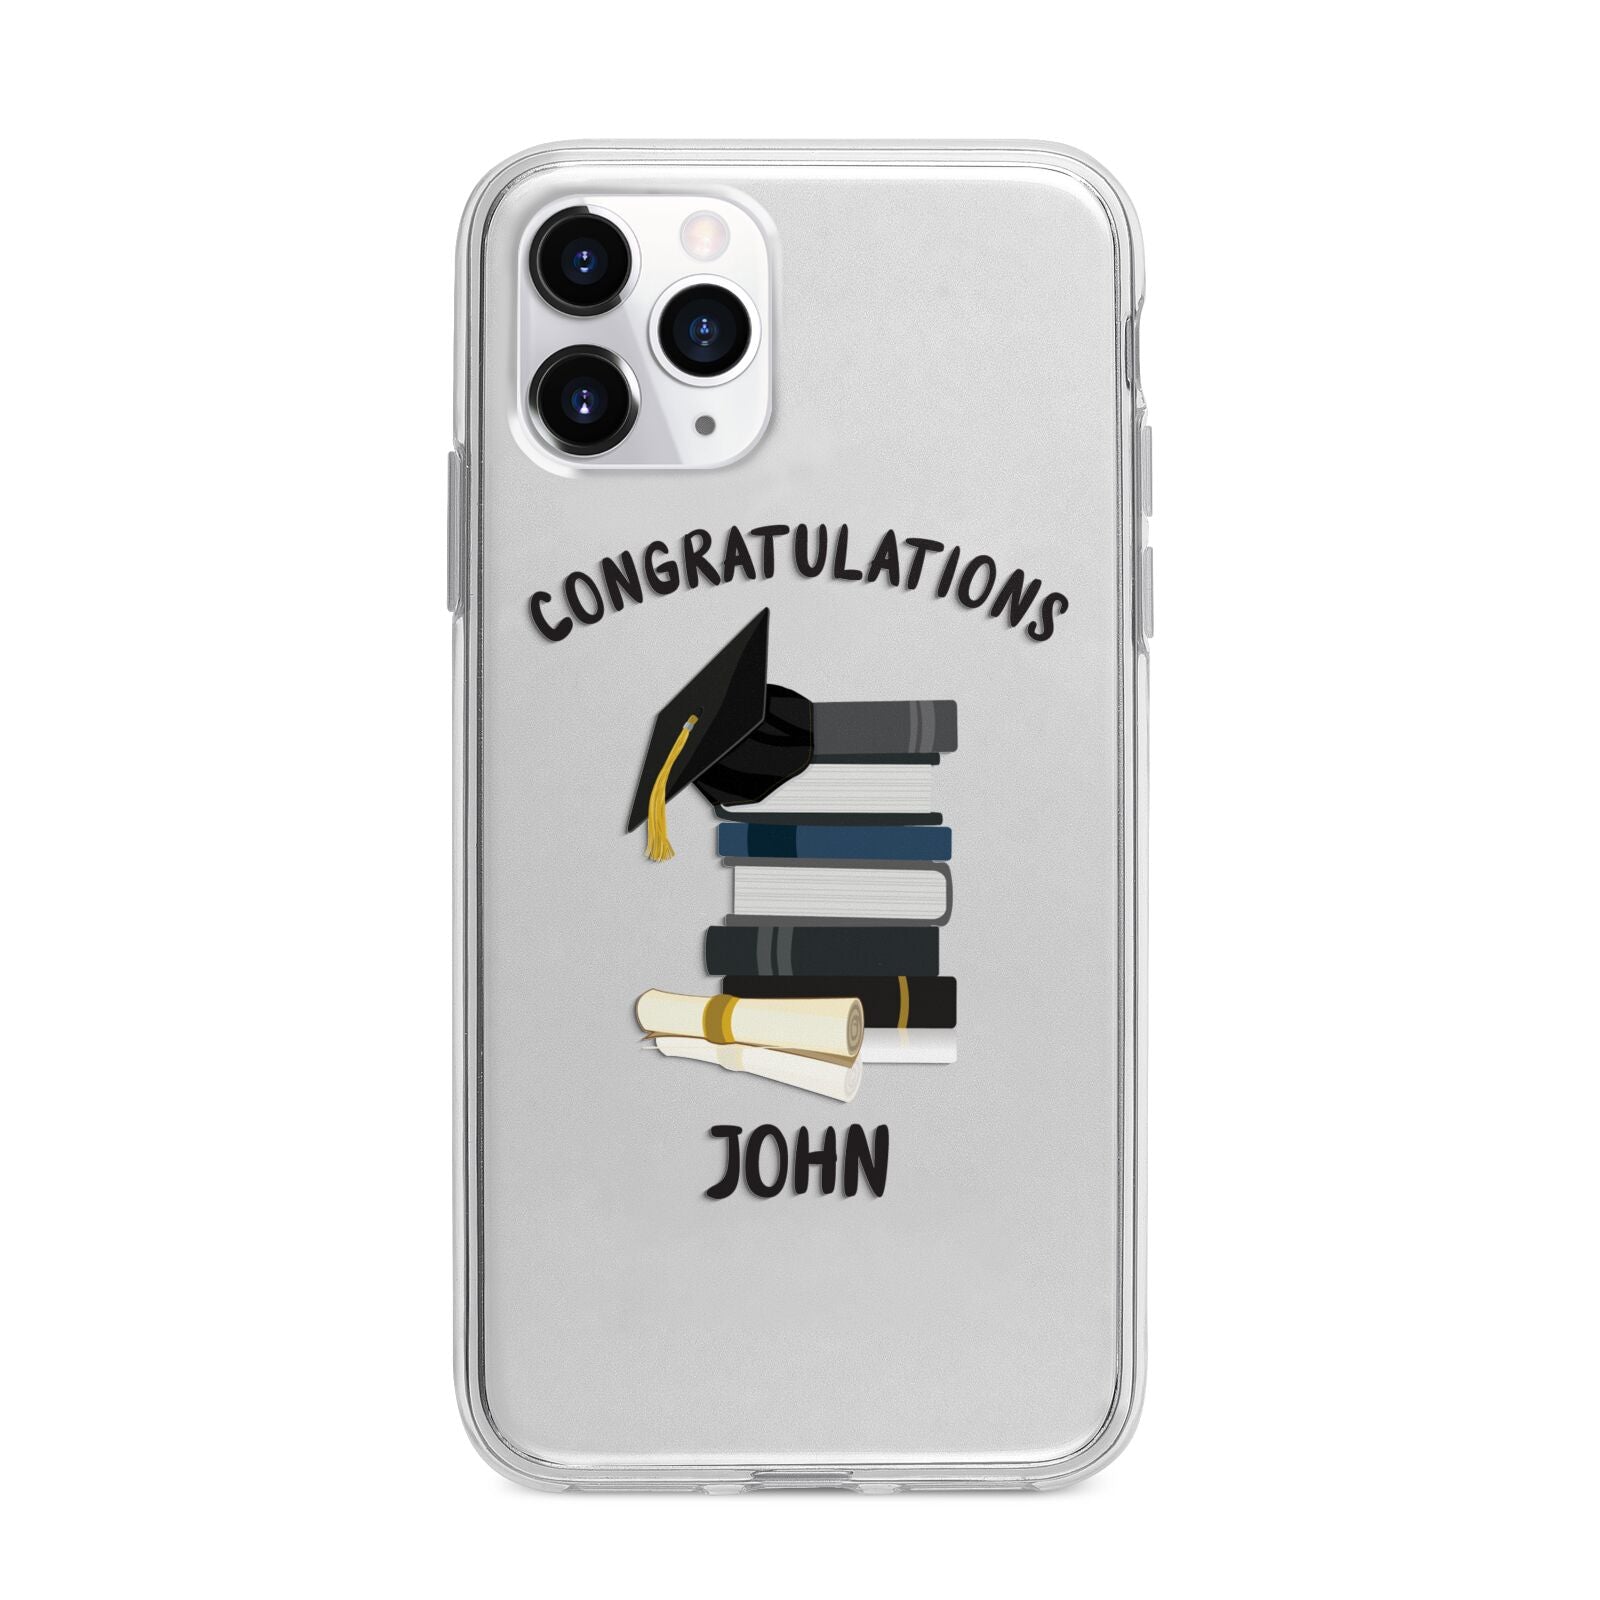 Congratulations Graduate Apple iPhone 11 Pro Max in Silver with Bumper Case